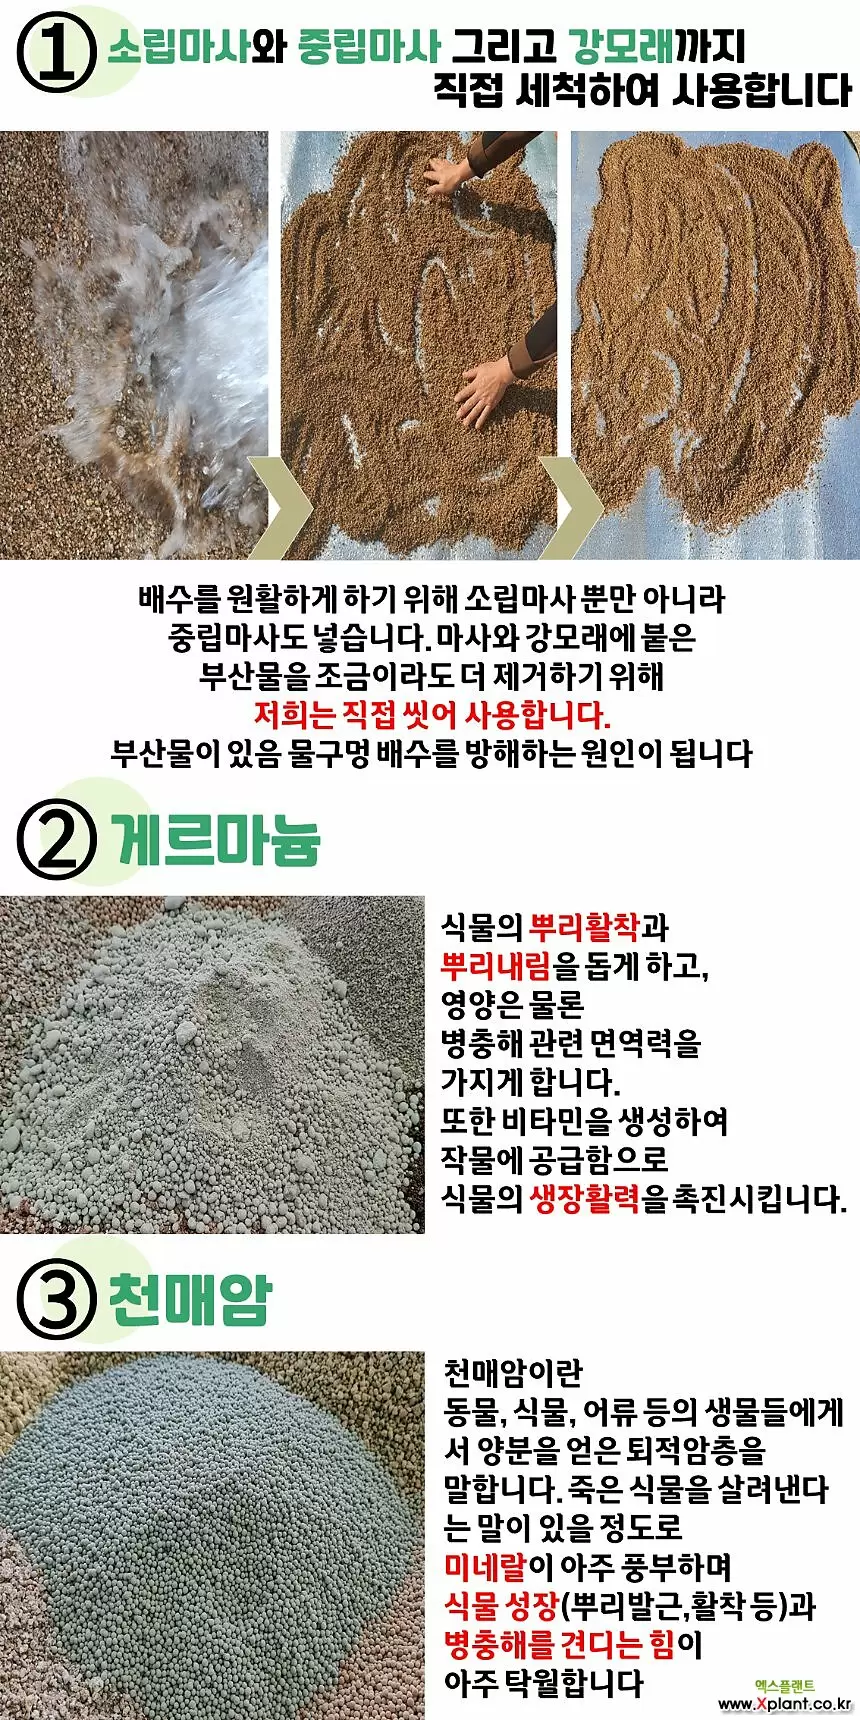 5kg(총7kg)/프리미엄다육이흙/분갈이흙(배합토)/단독배송